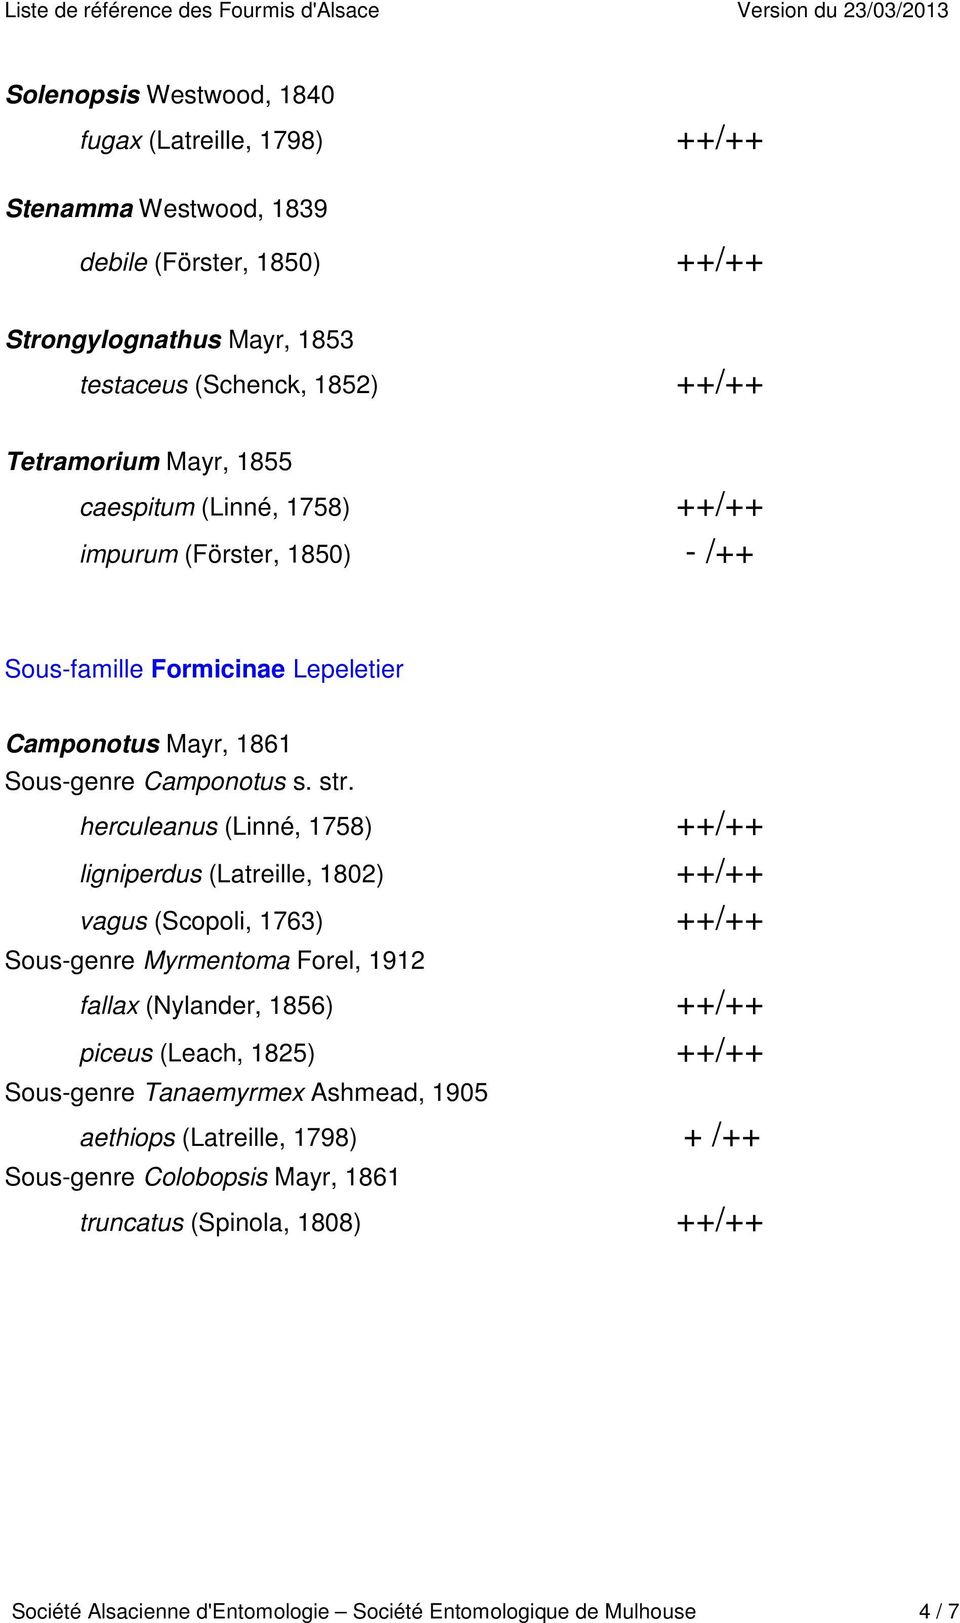 herculeanus (Linné, 1758) ++/++ ligniperdus (Latreille, 1802) ++/++ vagus (Scopoli, 1763) ++/++ Sous-genre Myrmentoma Forel, 1912 fallax (Nylander, 1856) ++/++ piceus (Leach, 1825)